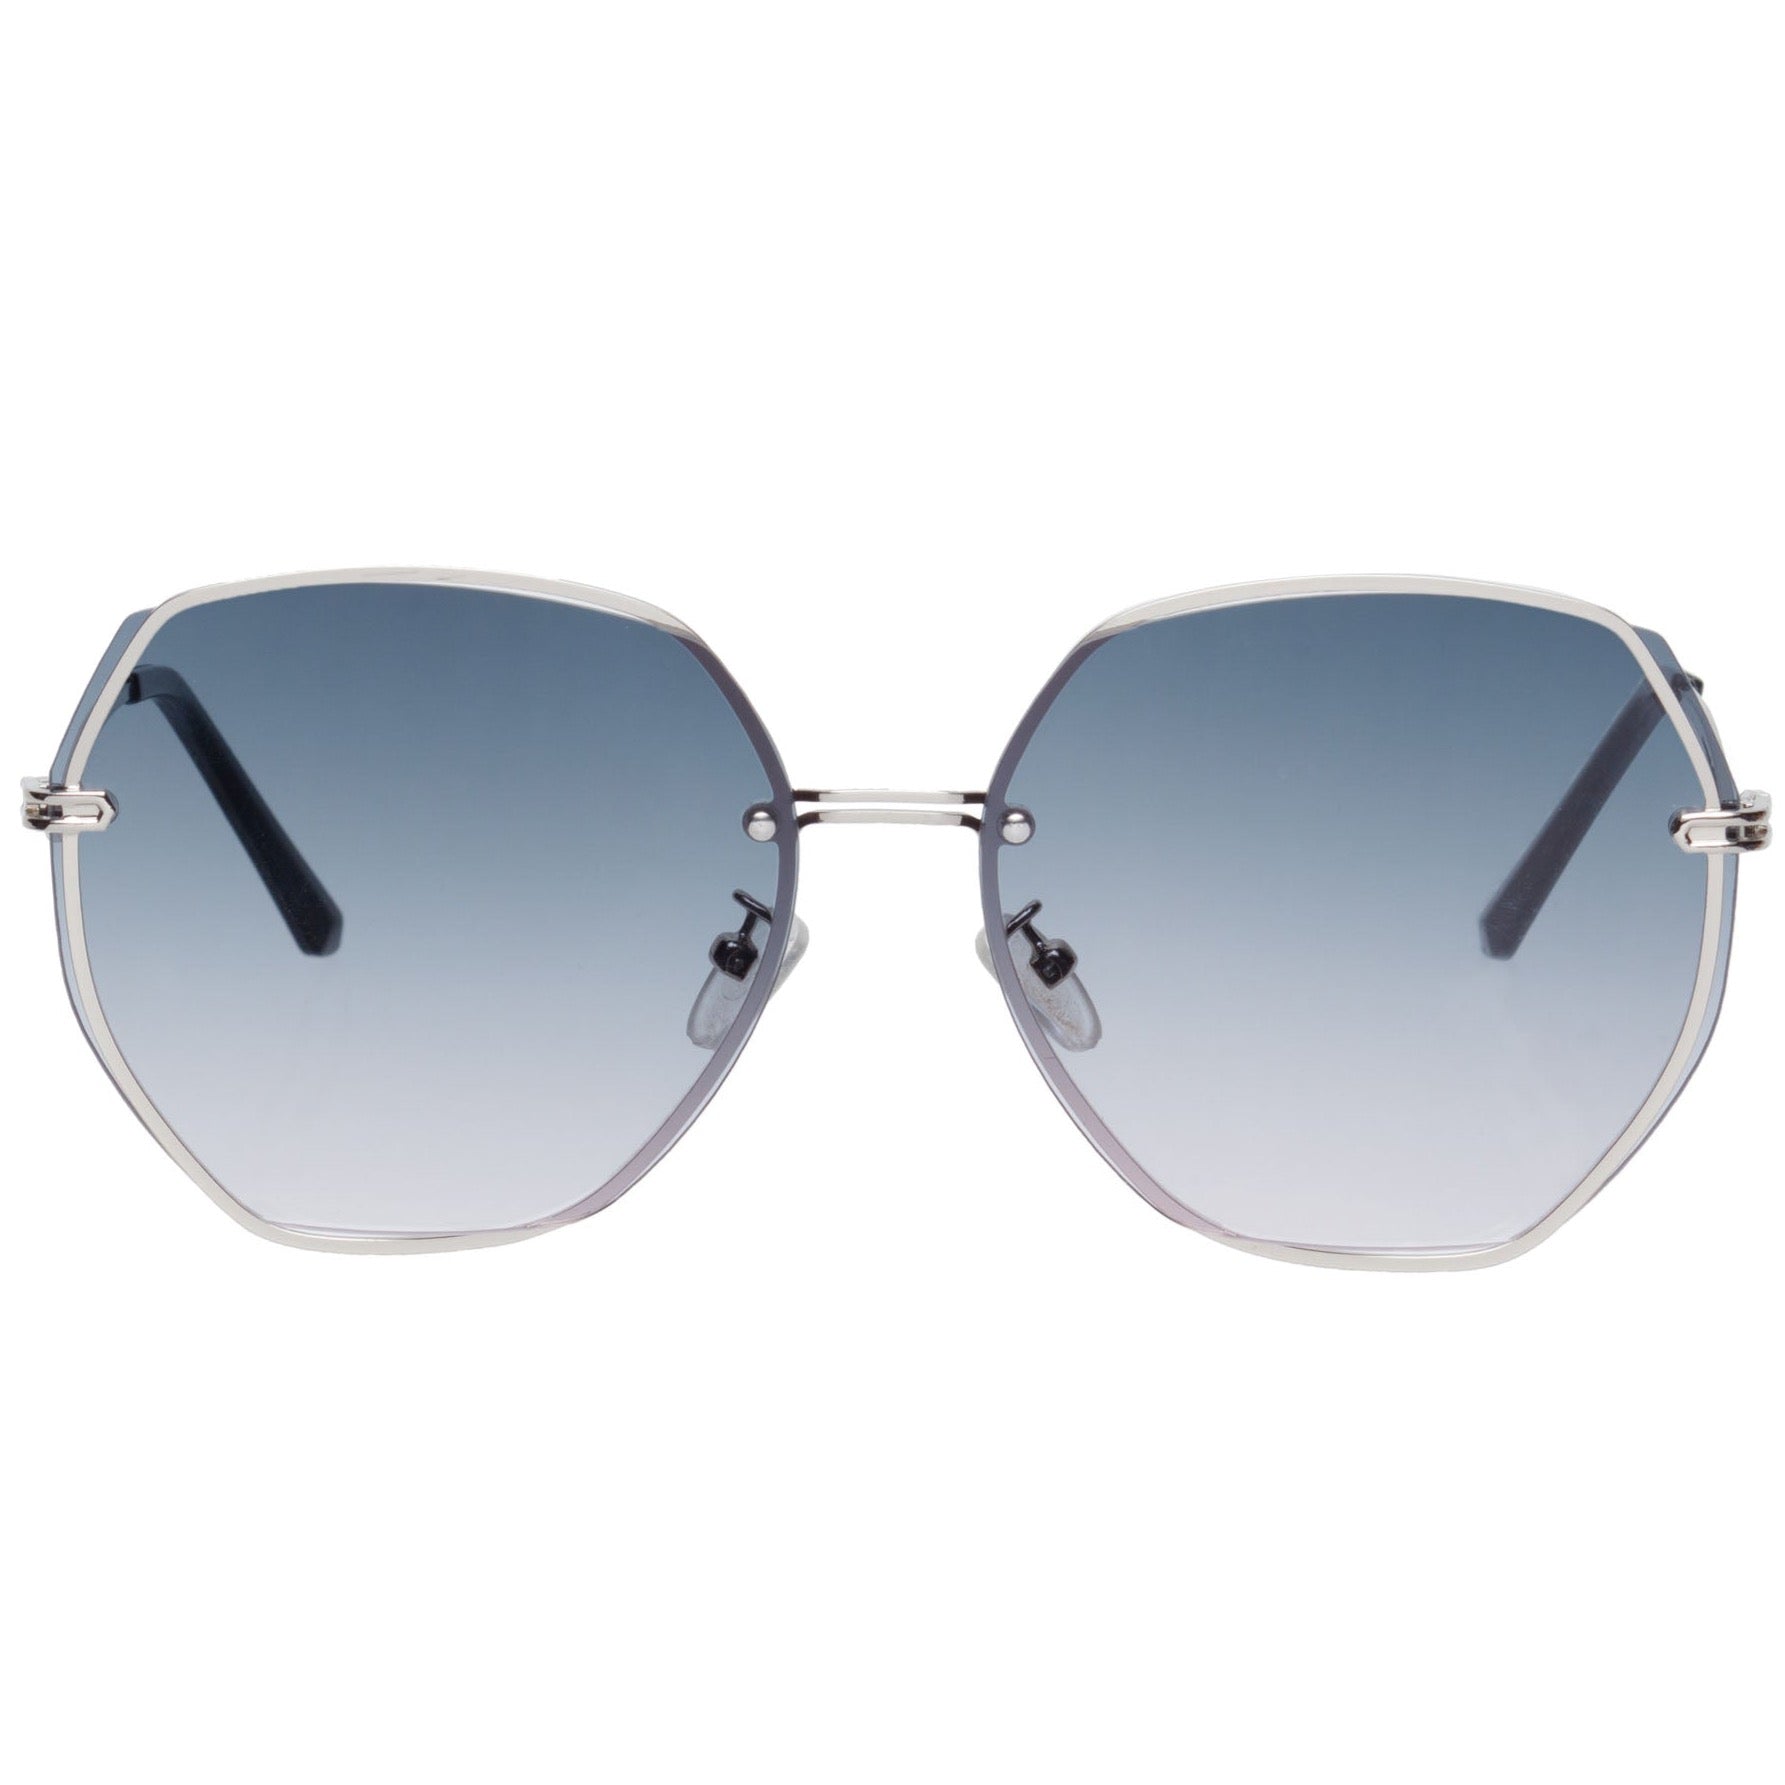 Sunglasses - EBS7004 Palma